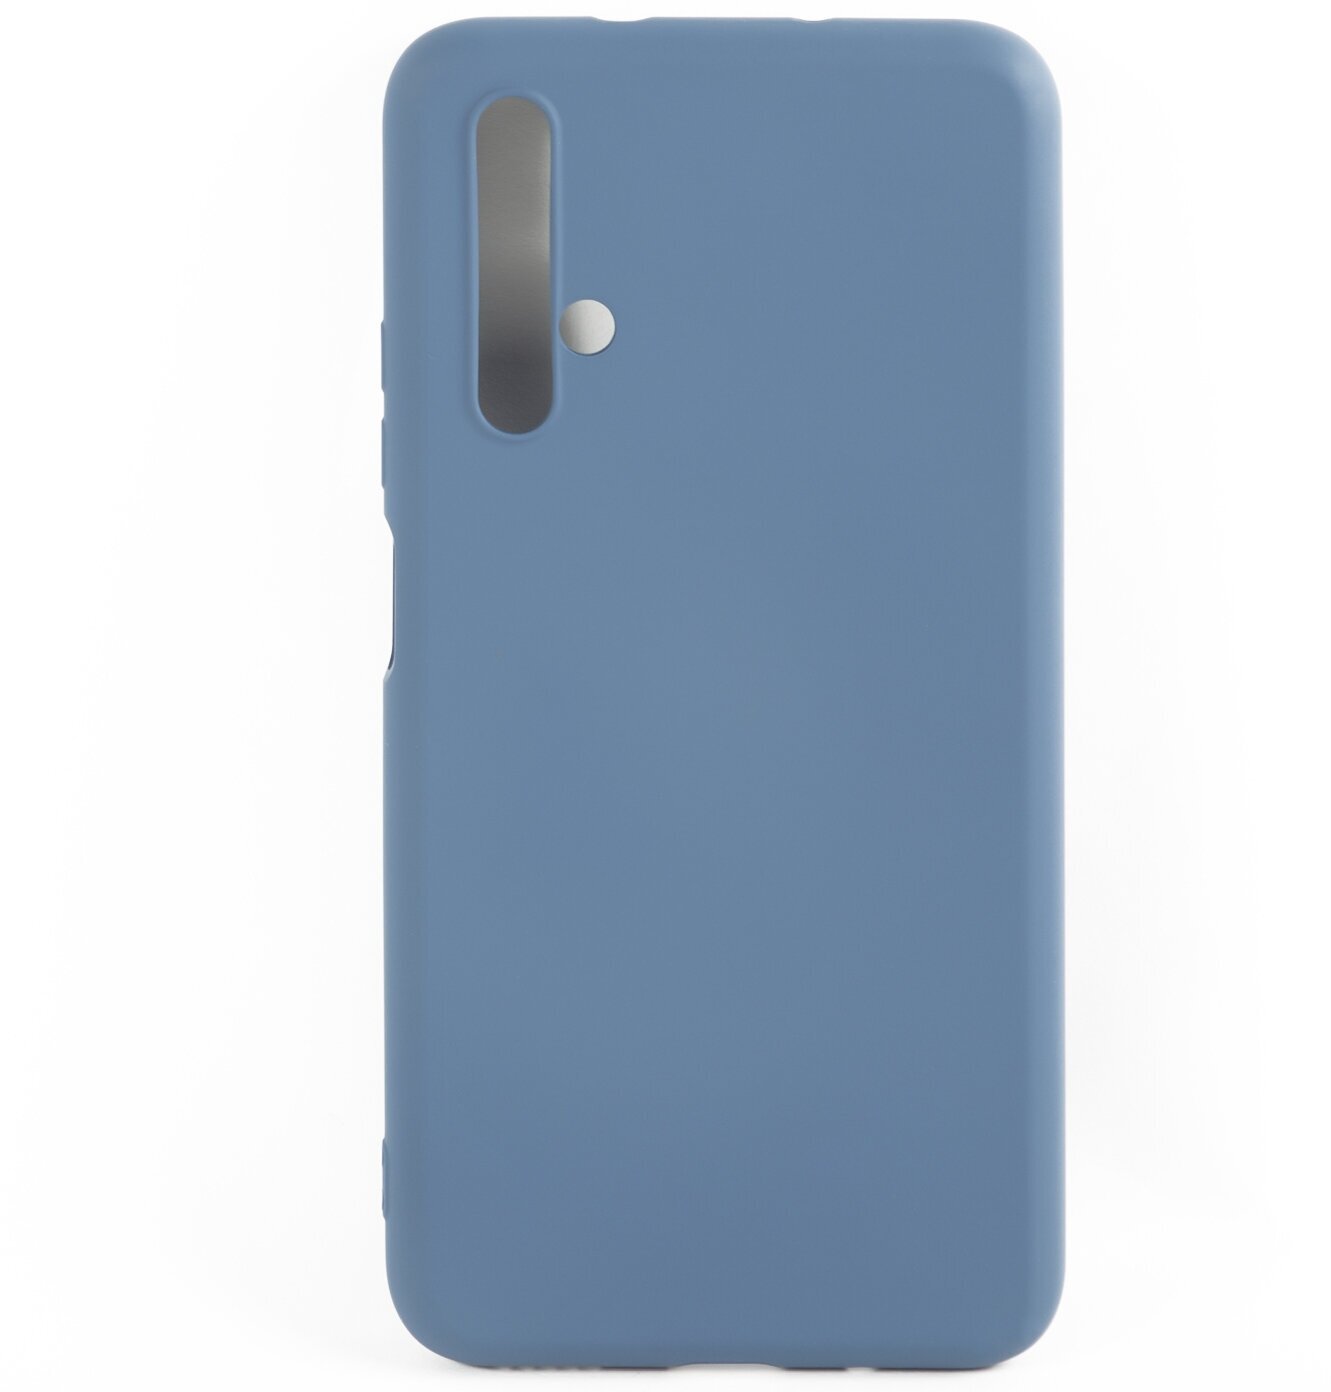 Защитный чехол для Huawei Honor 20 Nova 5T/Защита от царапин для телефона Хуавей Хонор 20 Нова 5T/Защита для смартфона/Защитный чехол синий